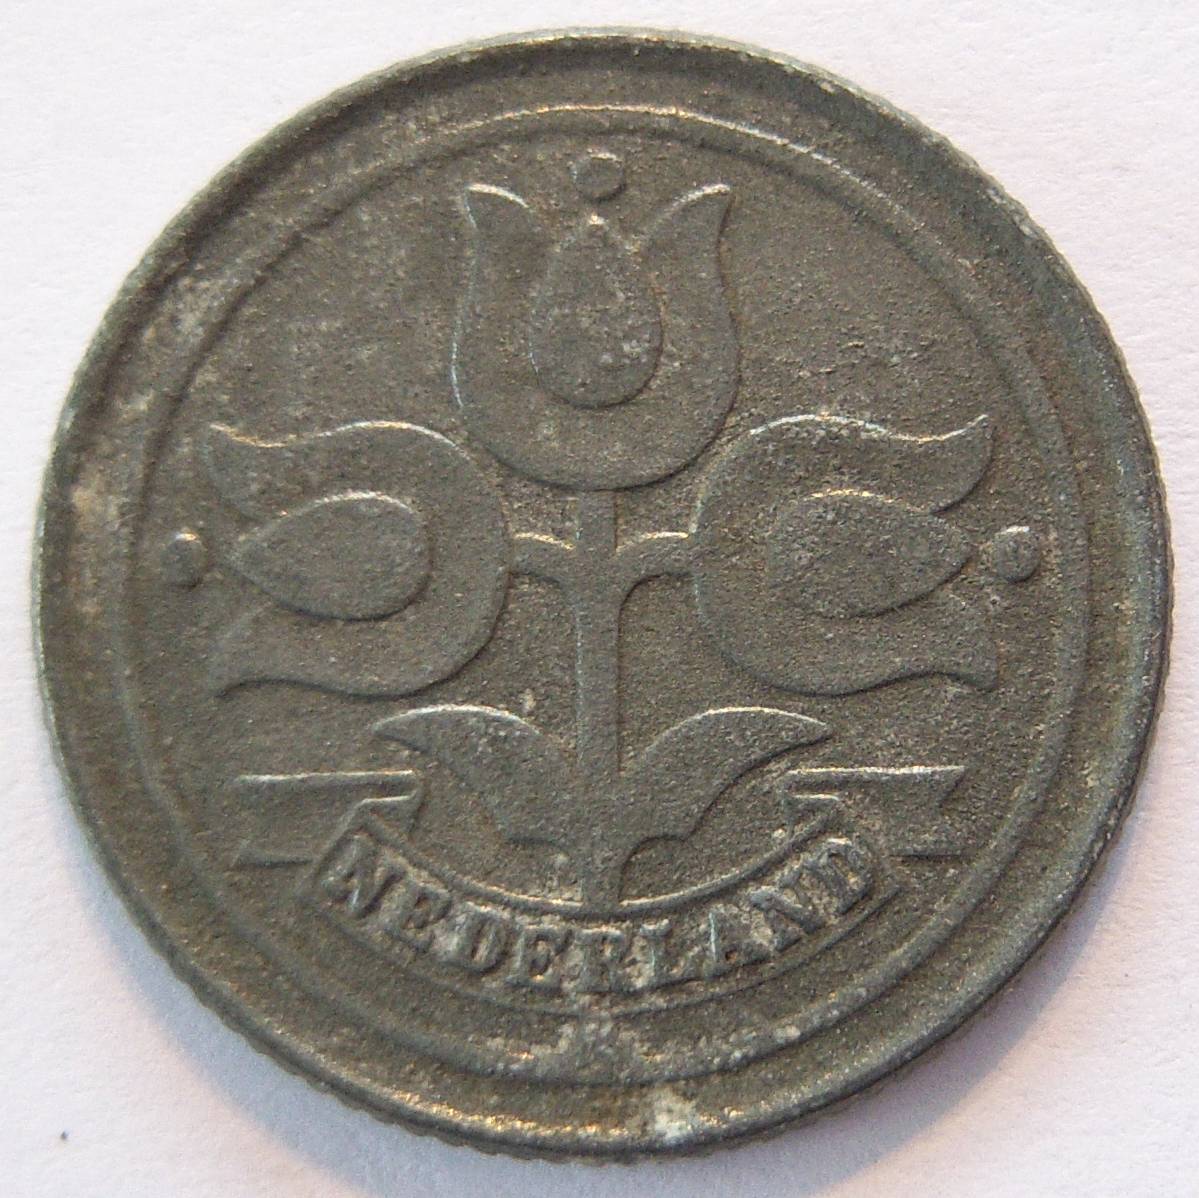  Niederlande 10 Cents 1941 Zink   